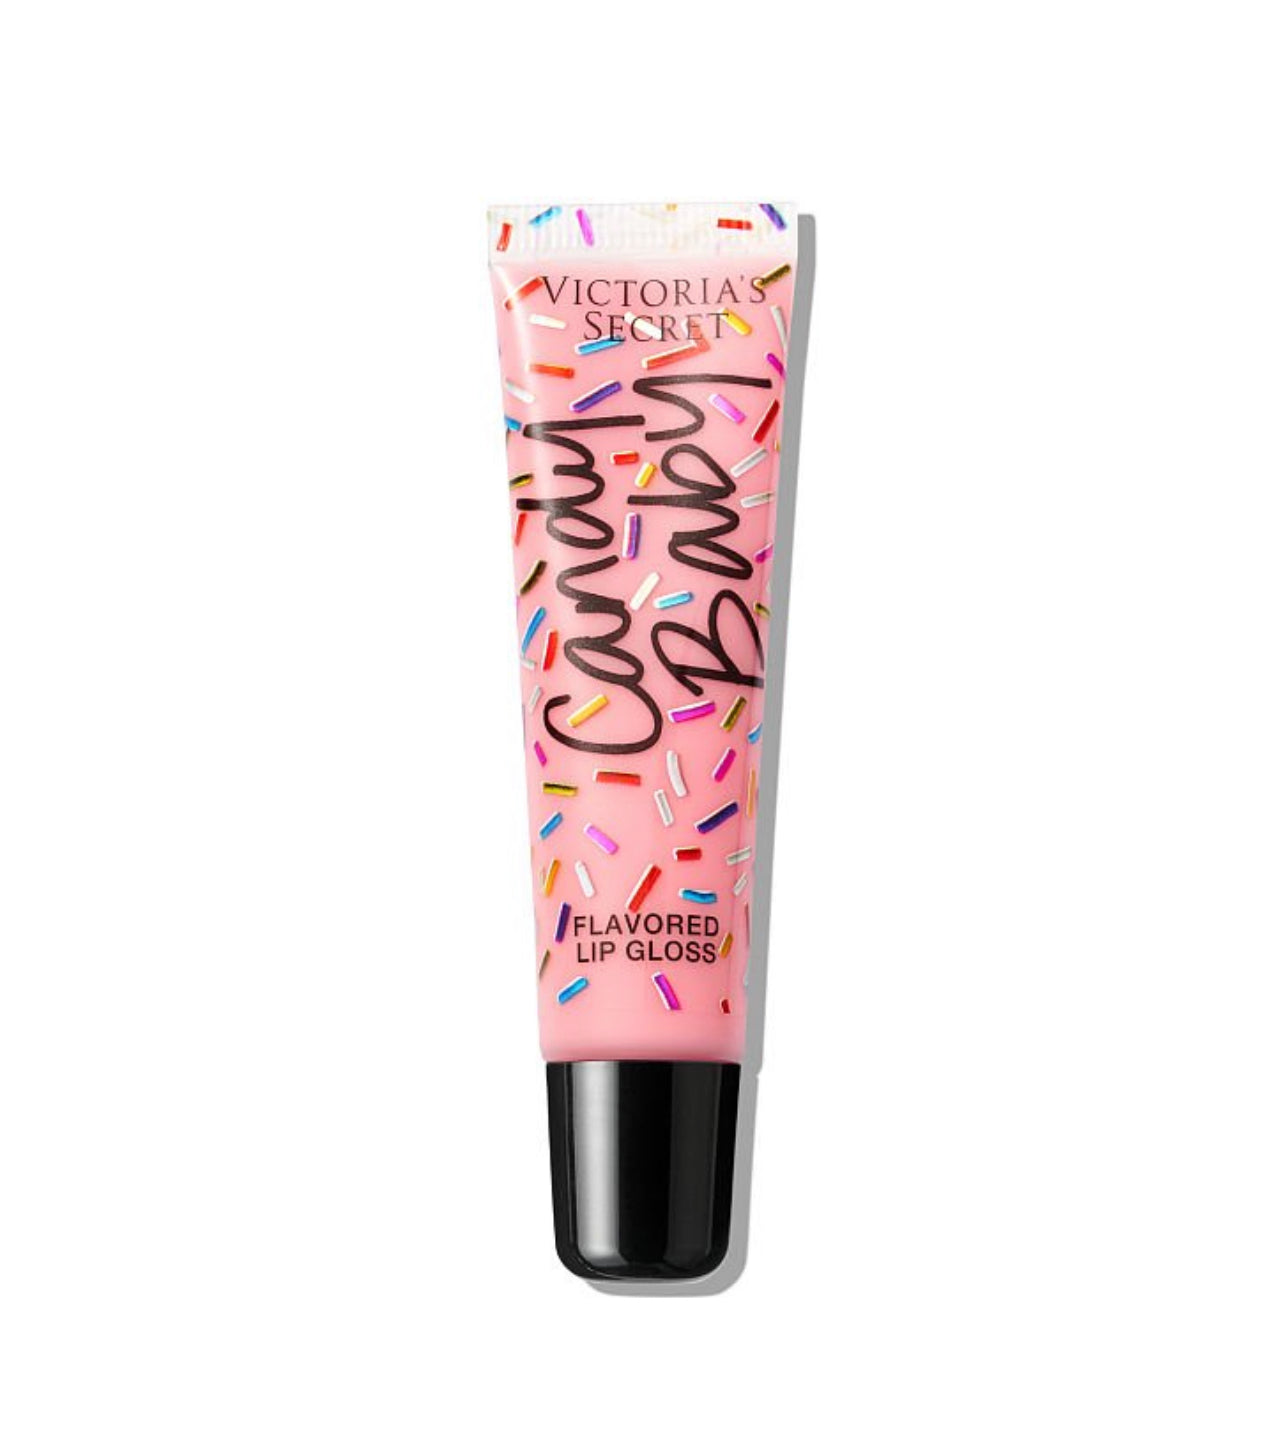 Victorias Secret flavored lip gloss